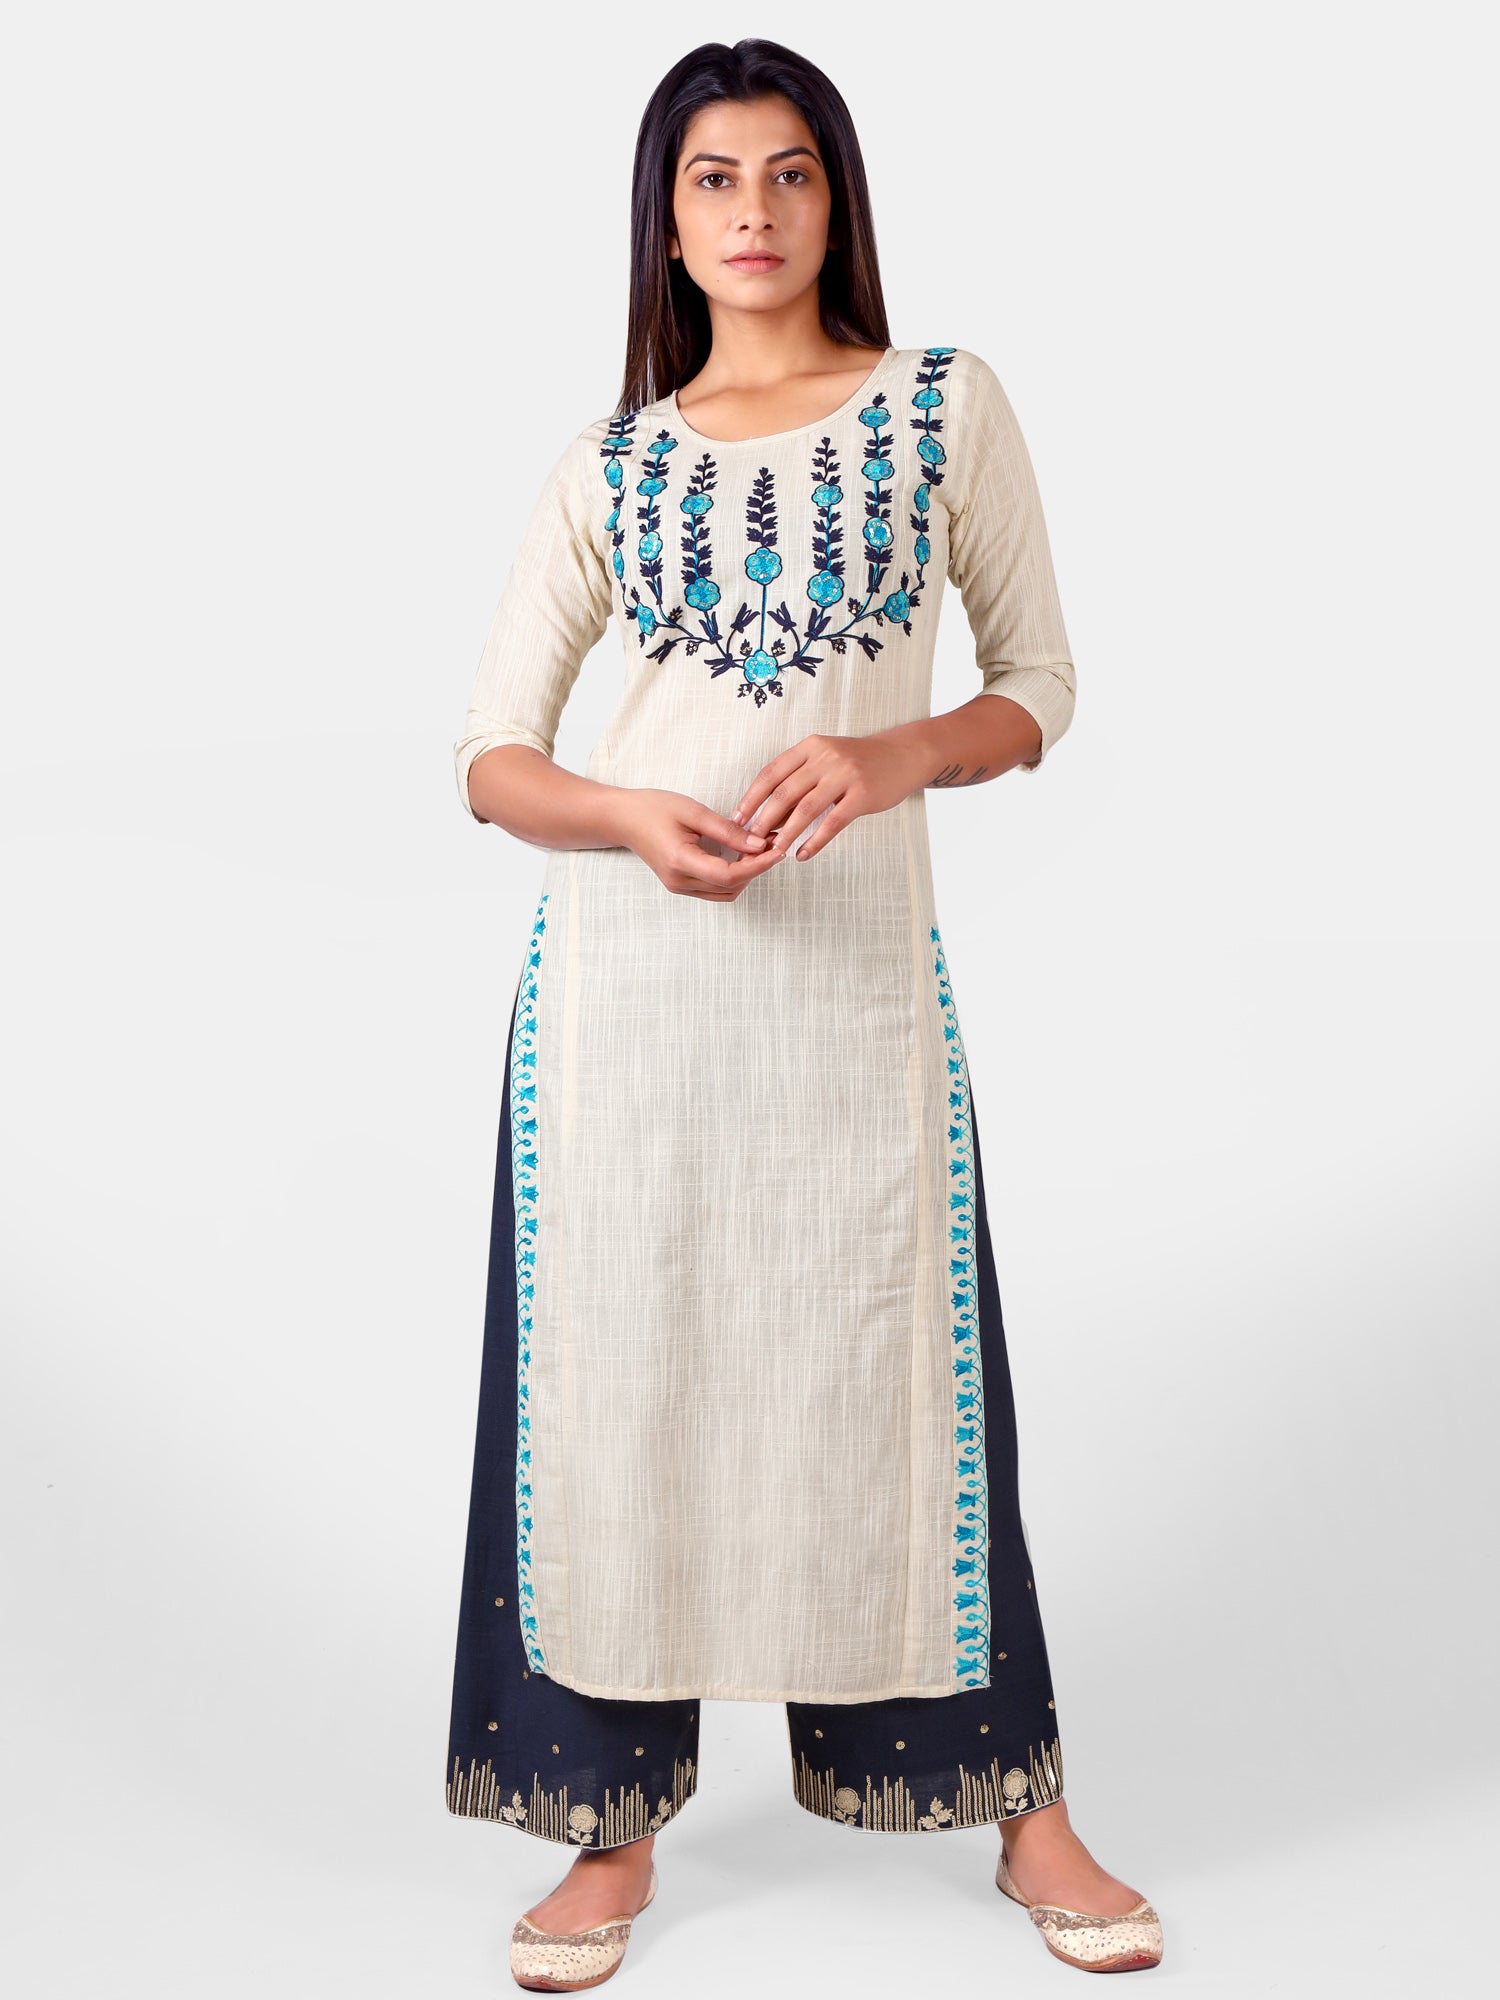 Women's Off White embroidery line kurta with neavy blue palazzo  - MESMORA FASHION